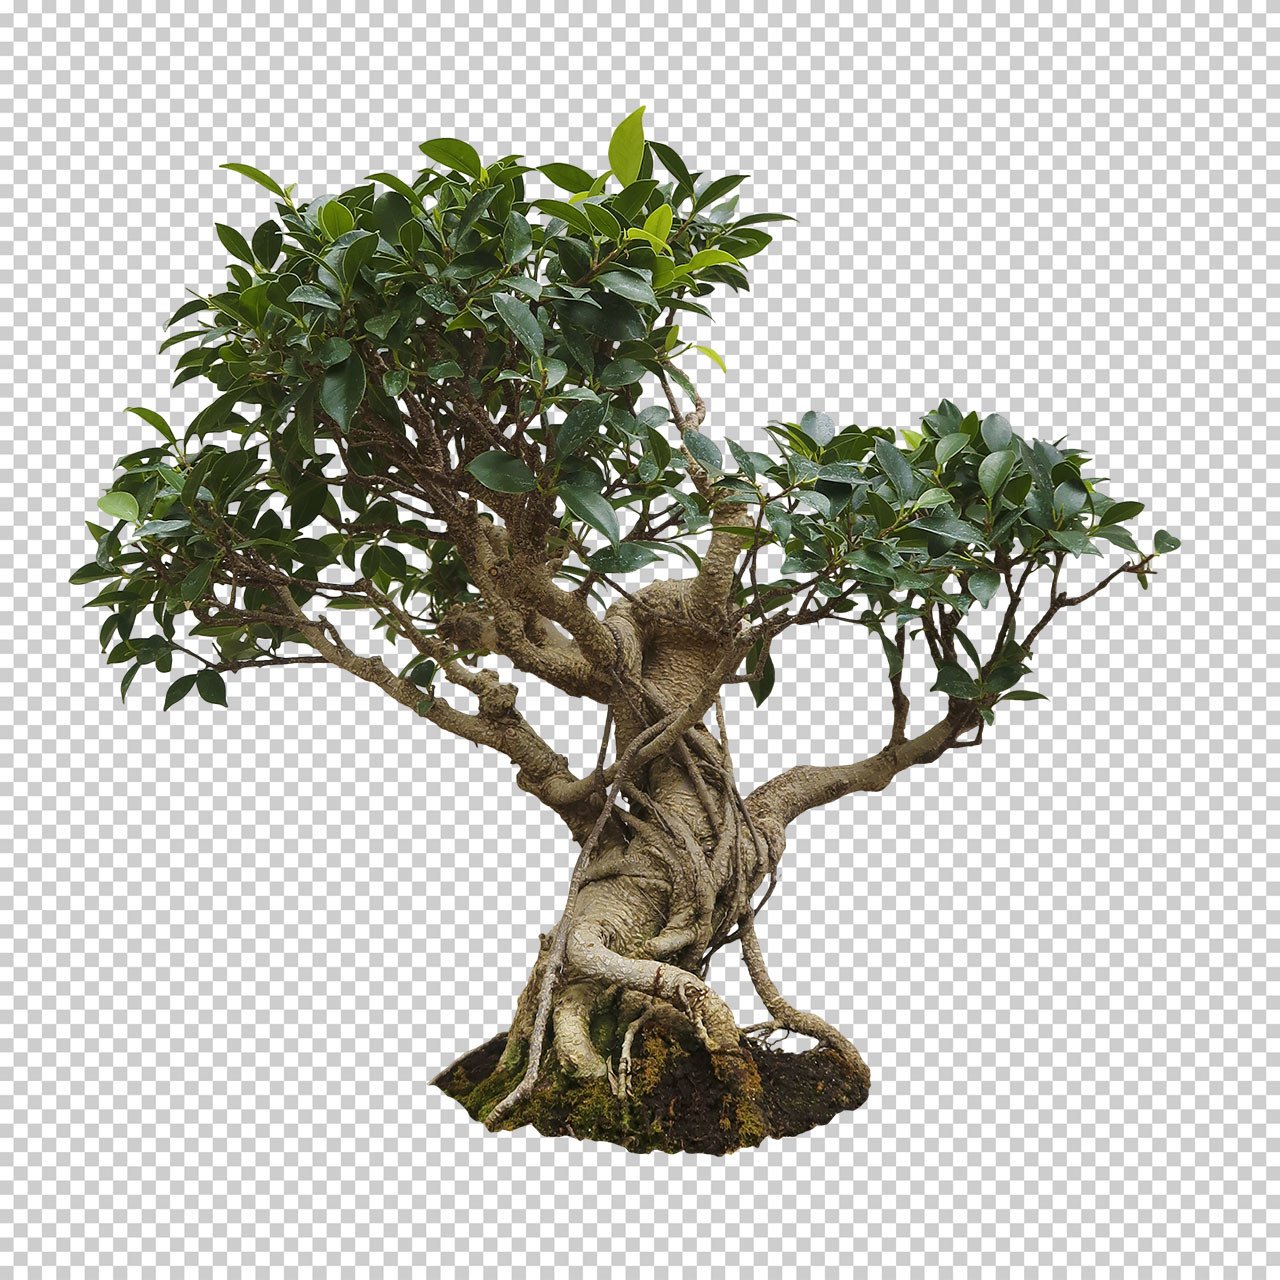 ArtStation - SPRING BONSAI TREE CUTOUT - Photo reference pack - 90+ PNG